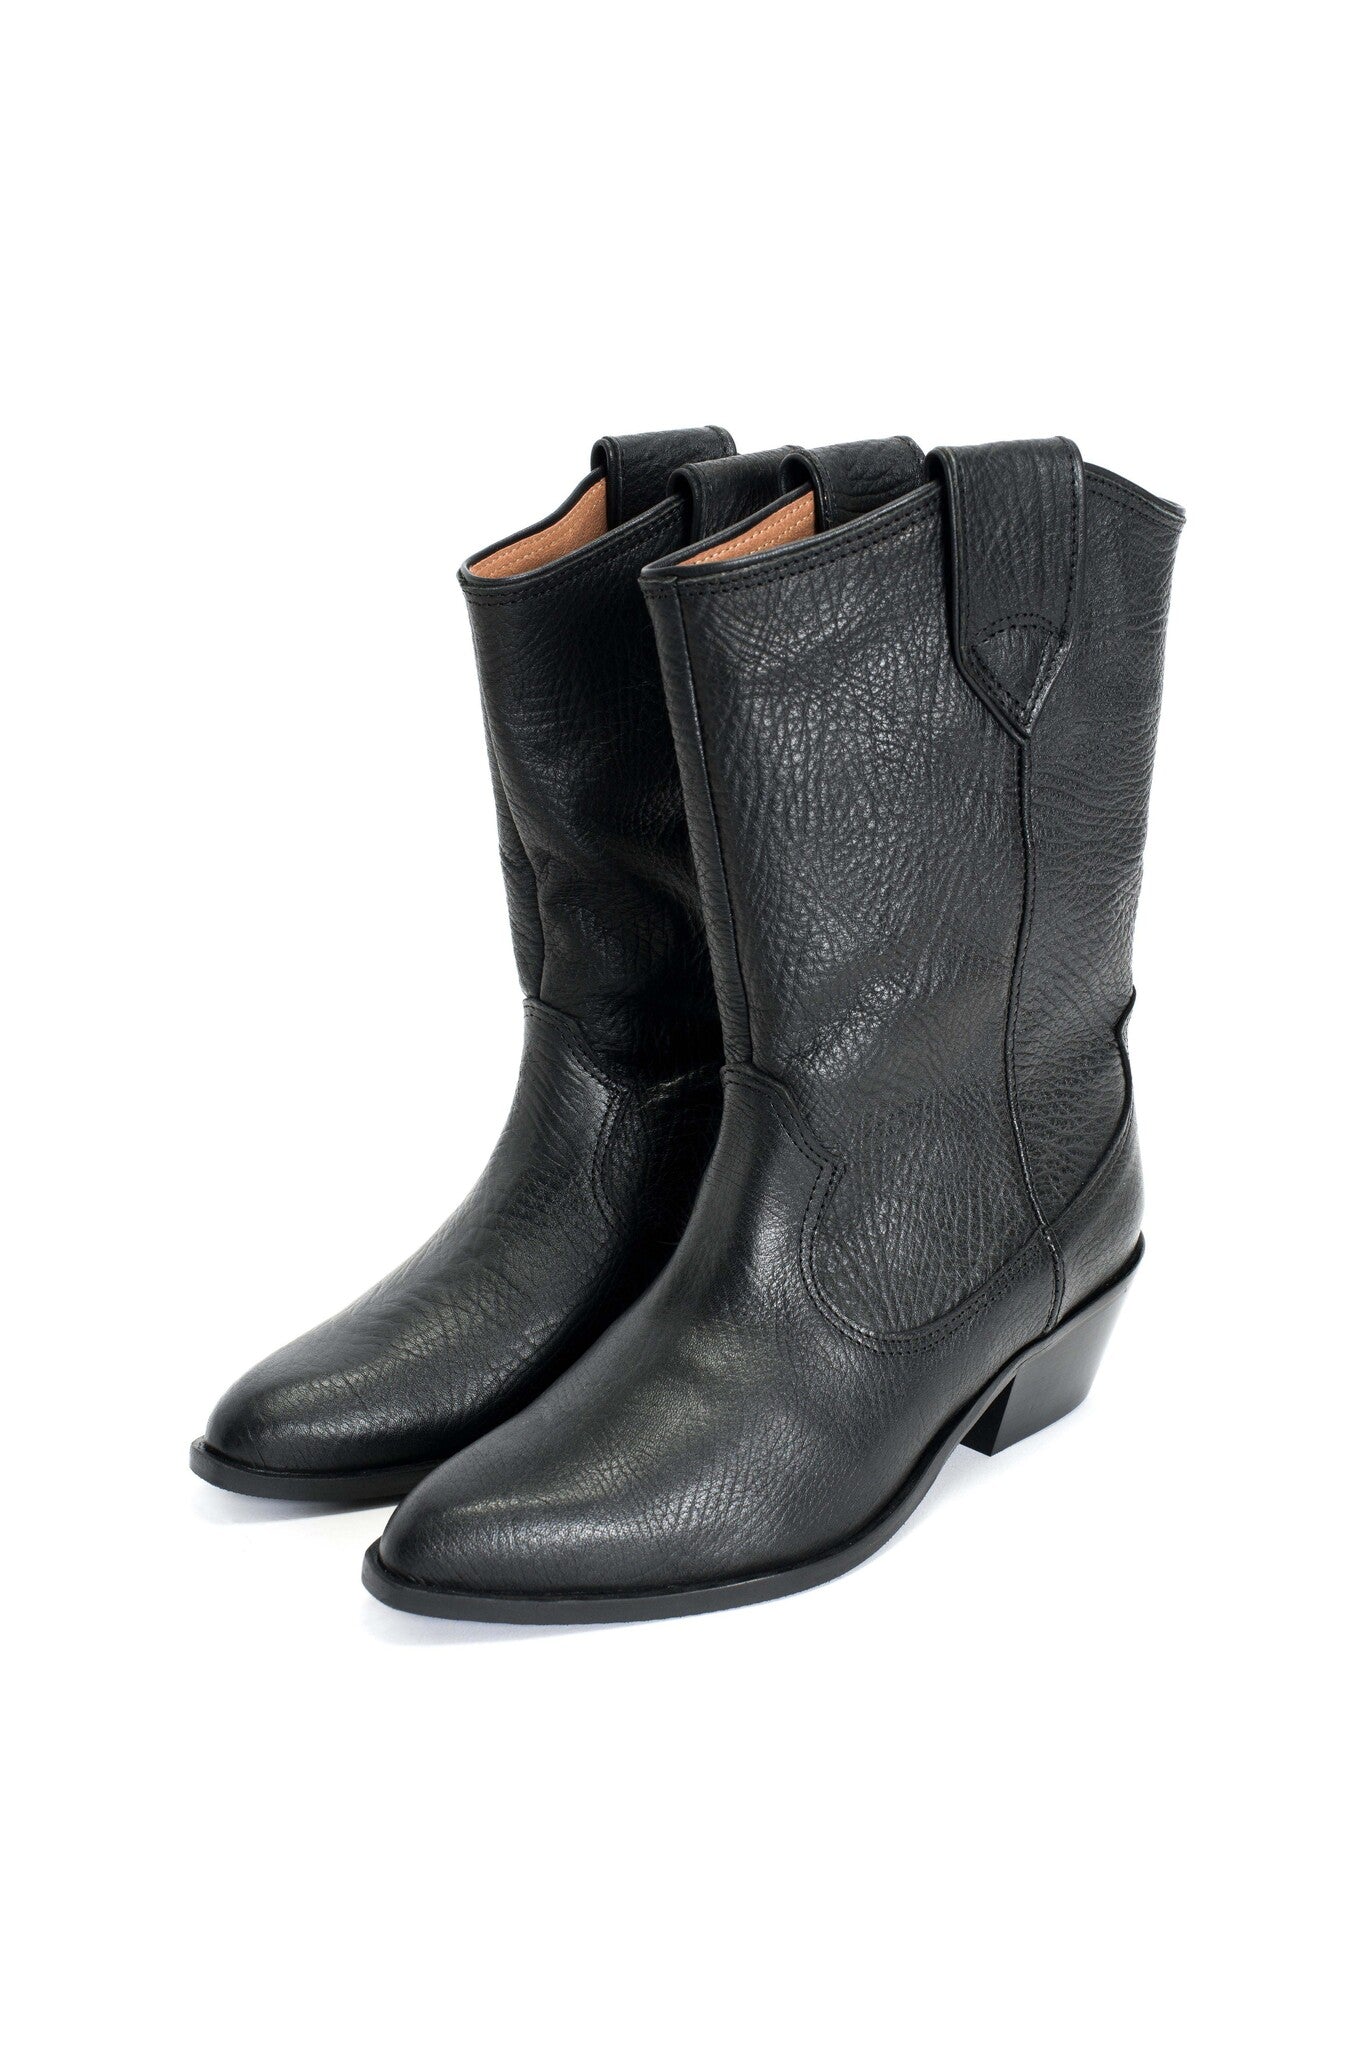 Saseline 35 Grained Leather Boots - Black